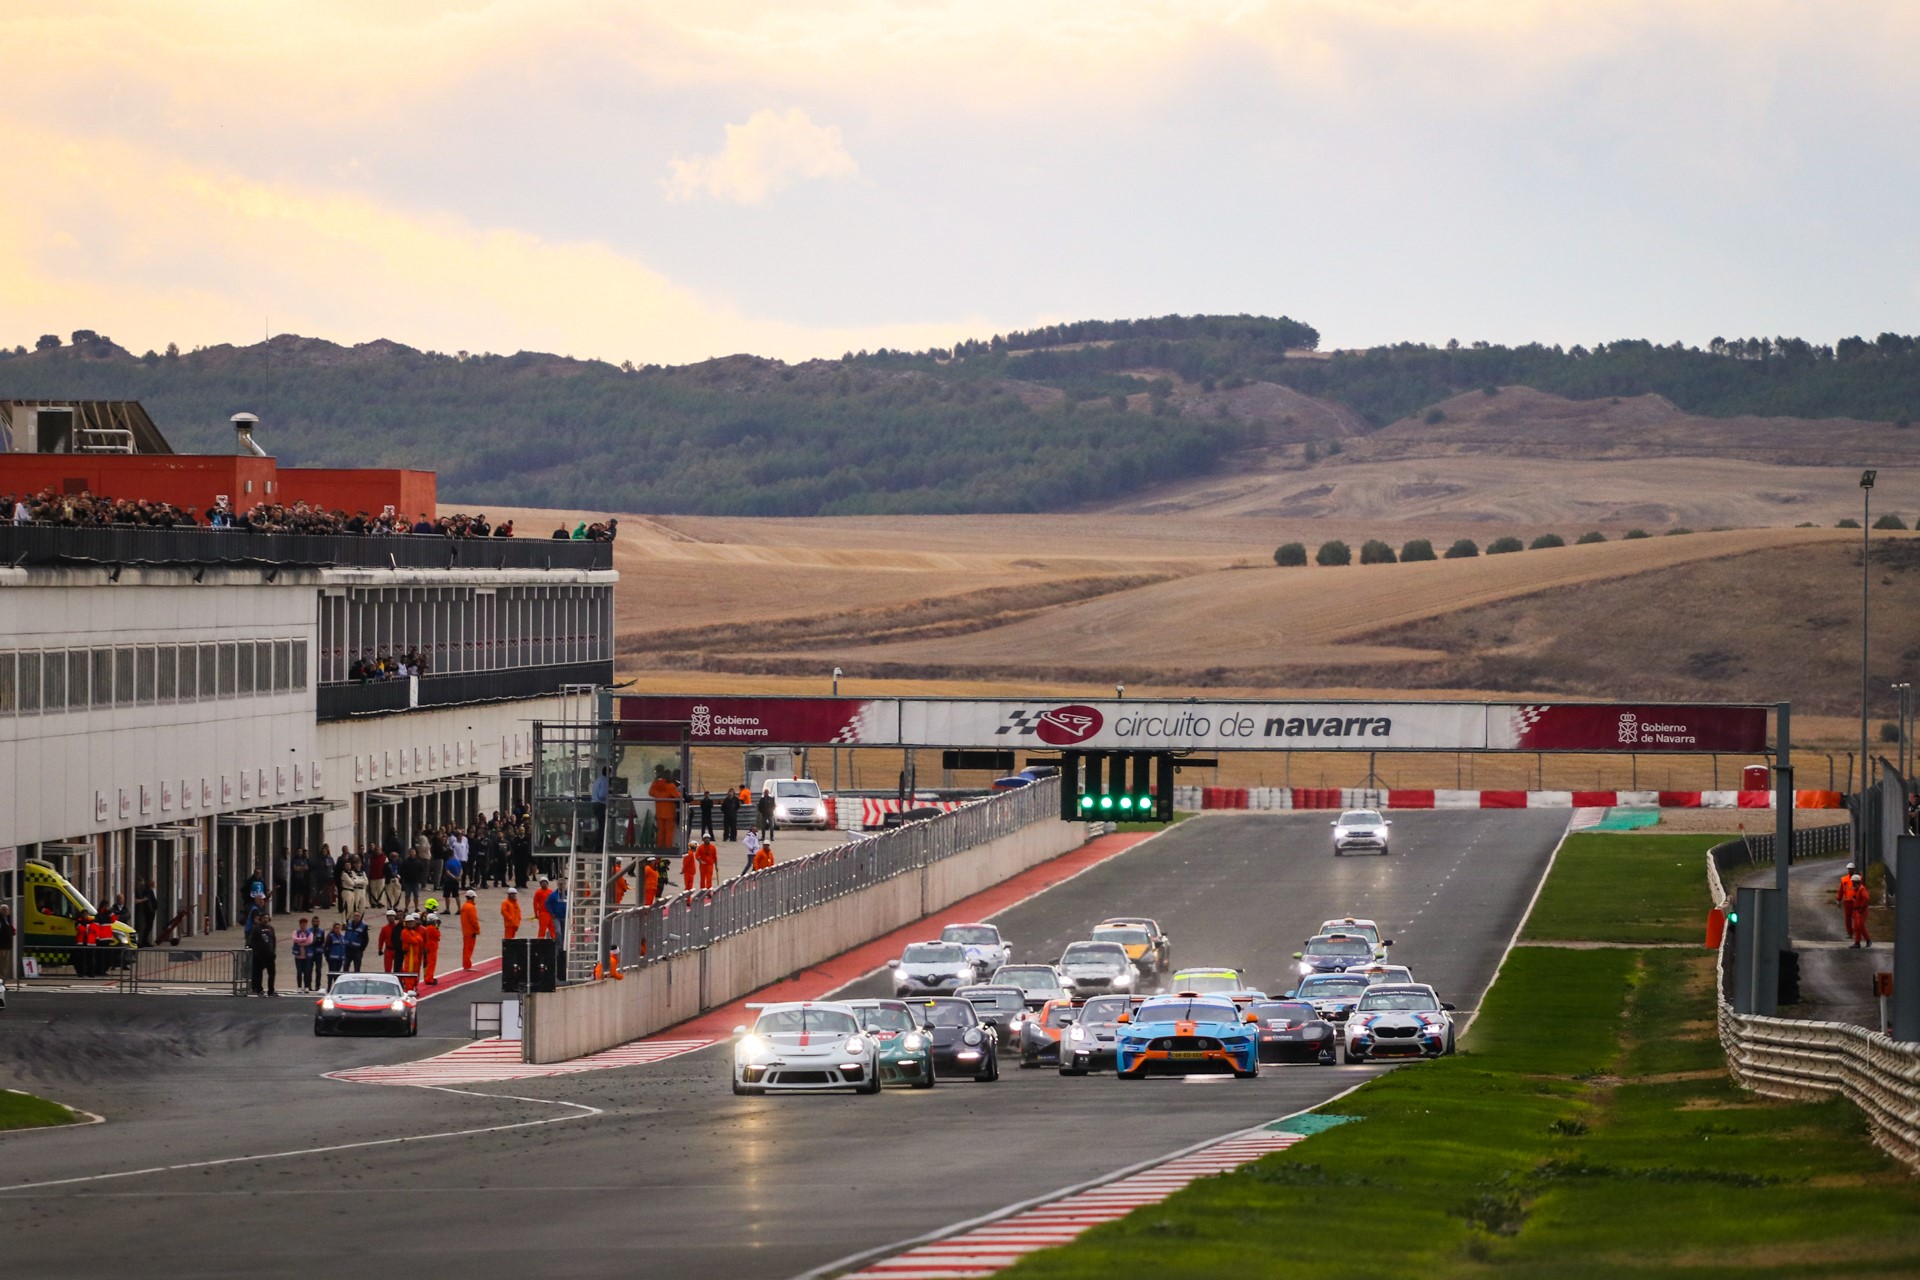 Gran fin de semana de carreras del GT-CER en Navarra